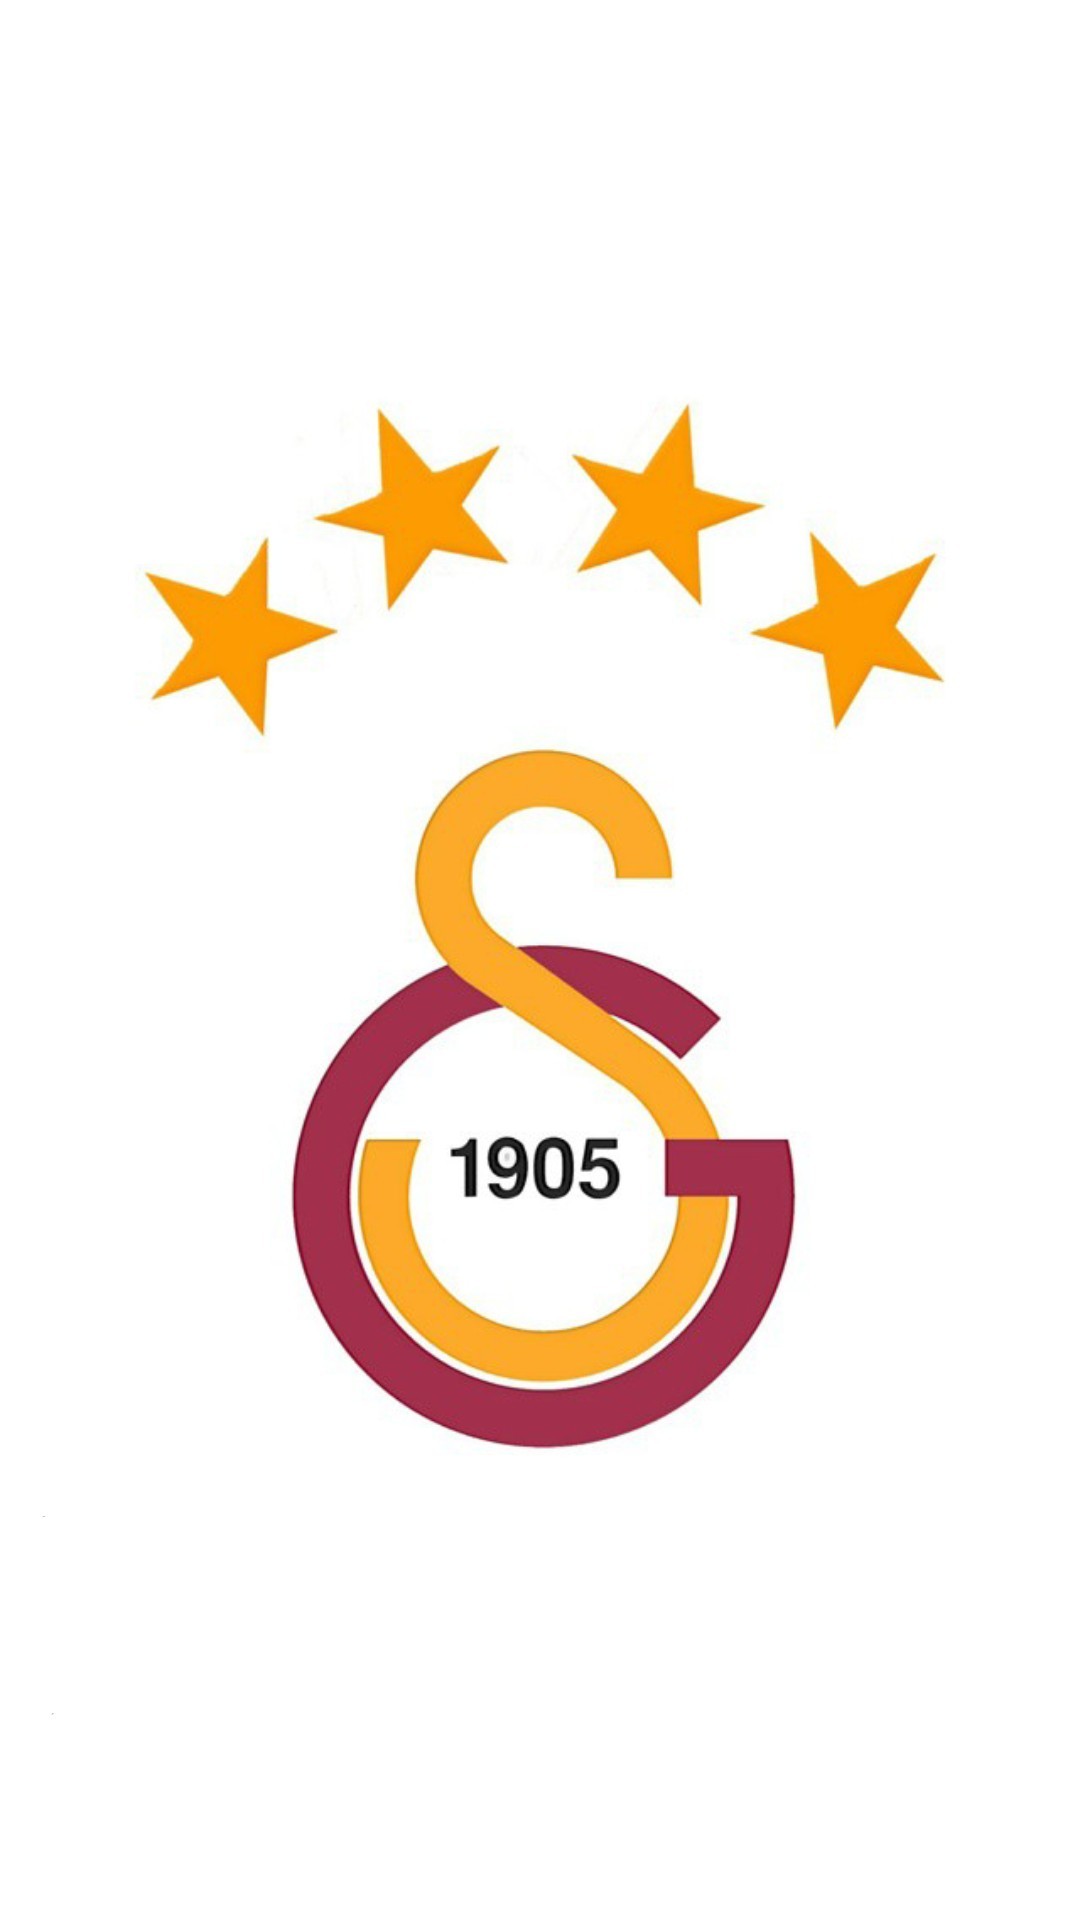 General 1080x1920 soccer 1905 (Year) logo portrait display simple background digital art